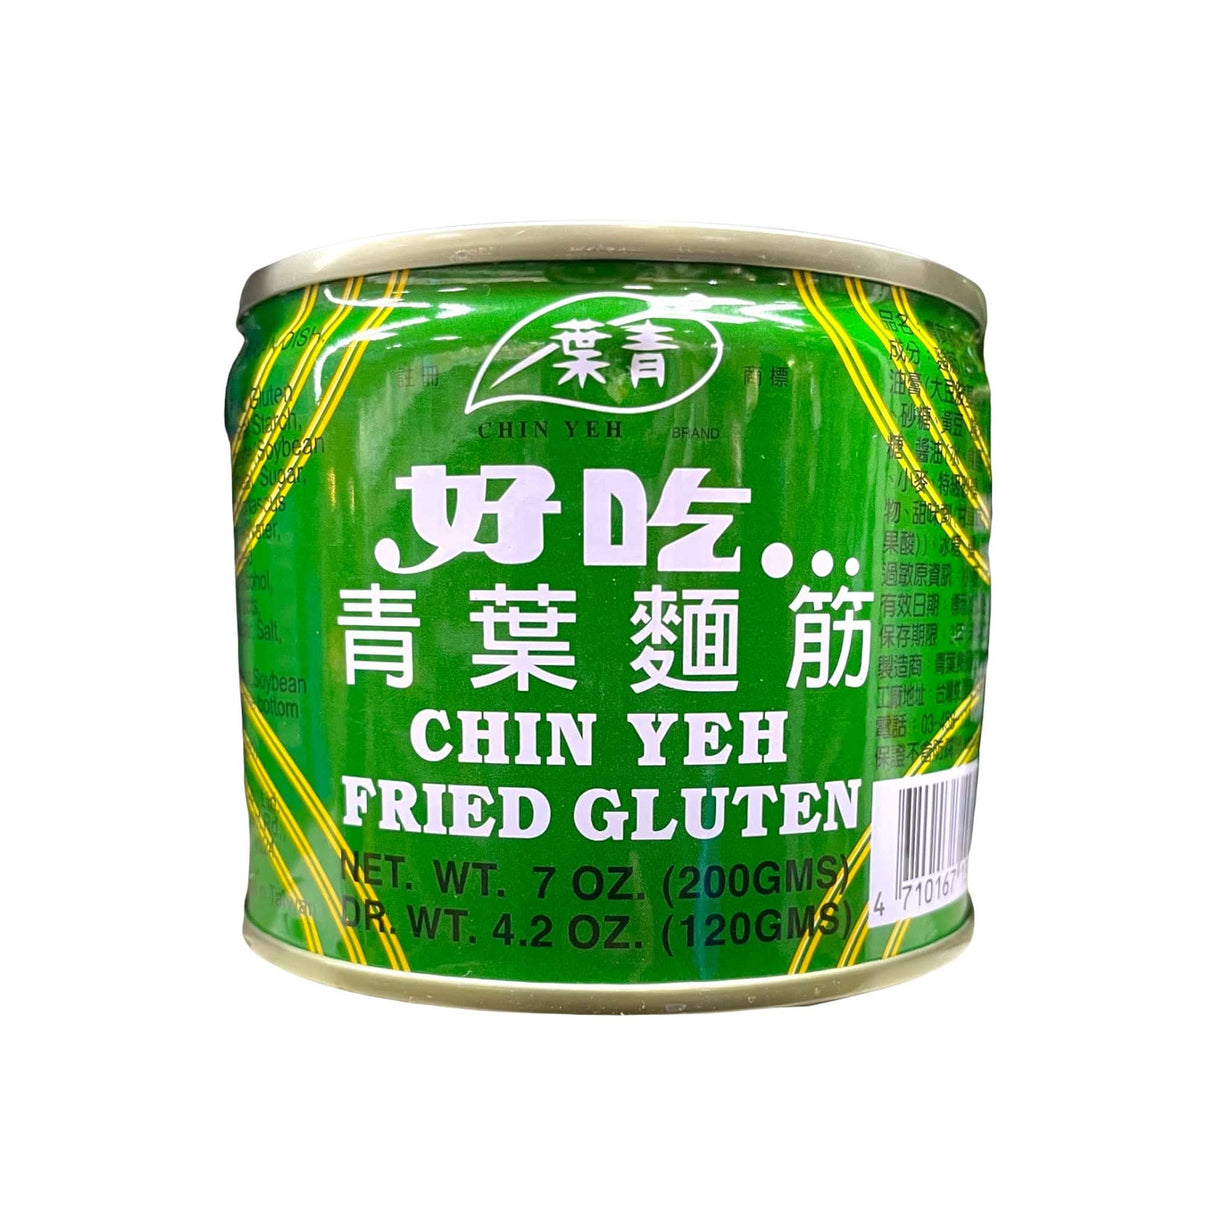 Chin Yeh Fried Gluten